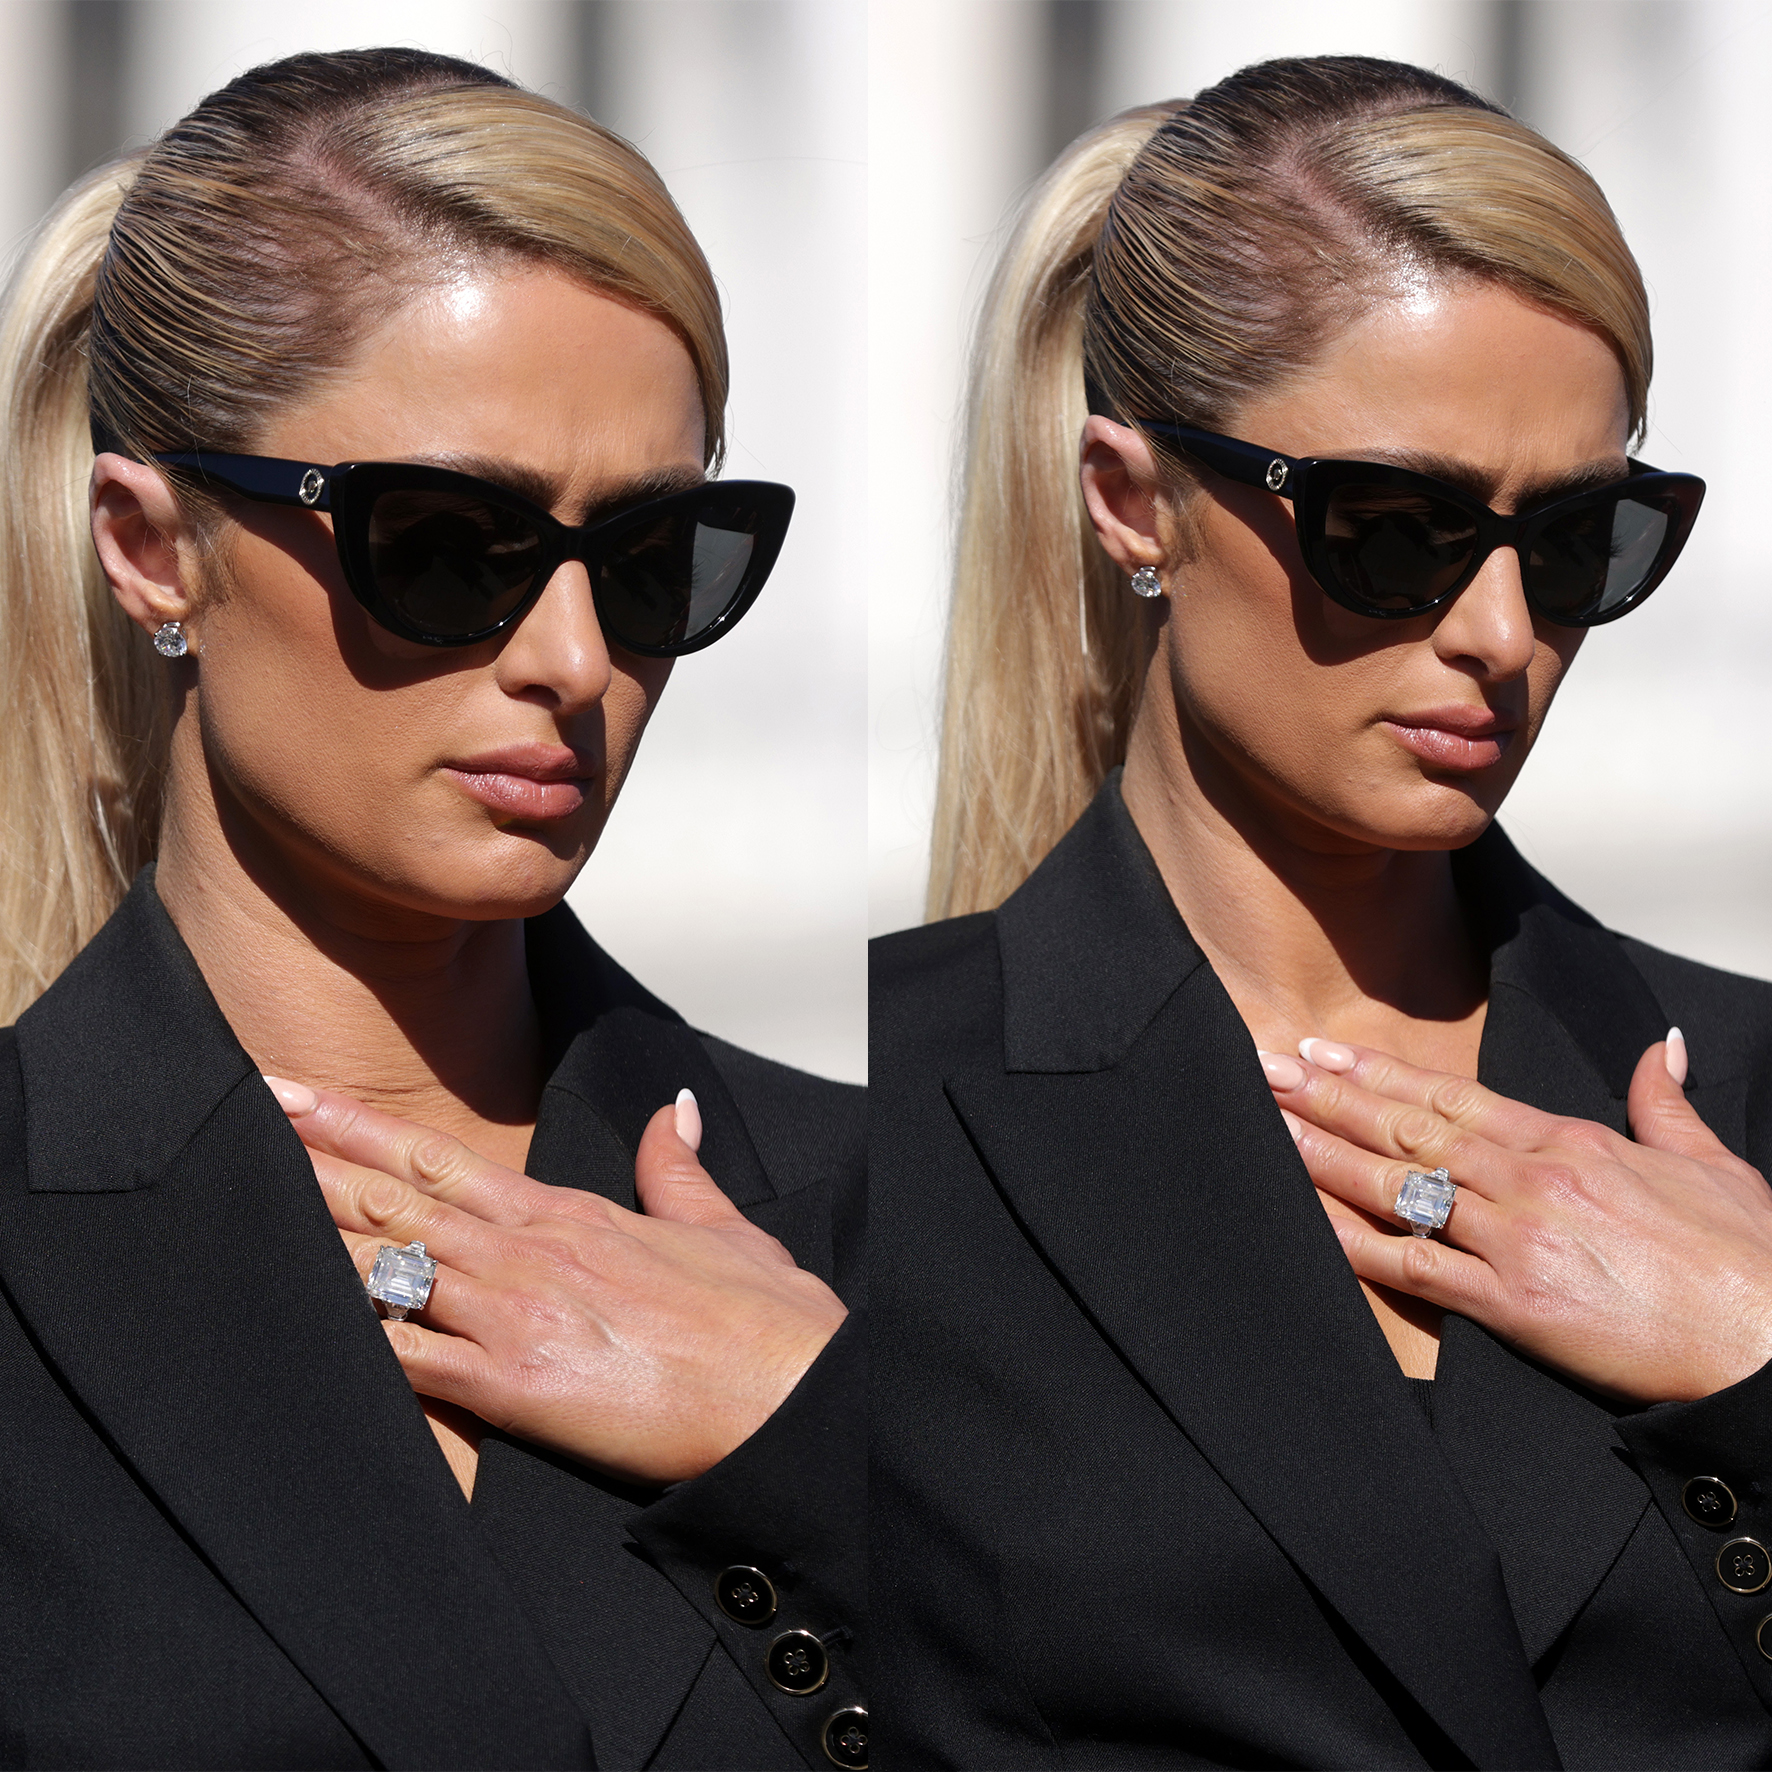 H Paris Hilton εναντίον της κακοποιητικής «βιομηχανίας εφήβων» στην Αμερική